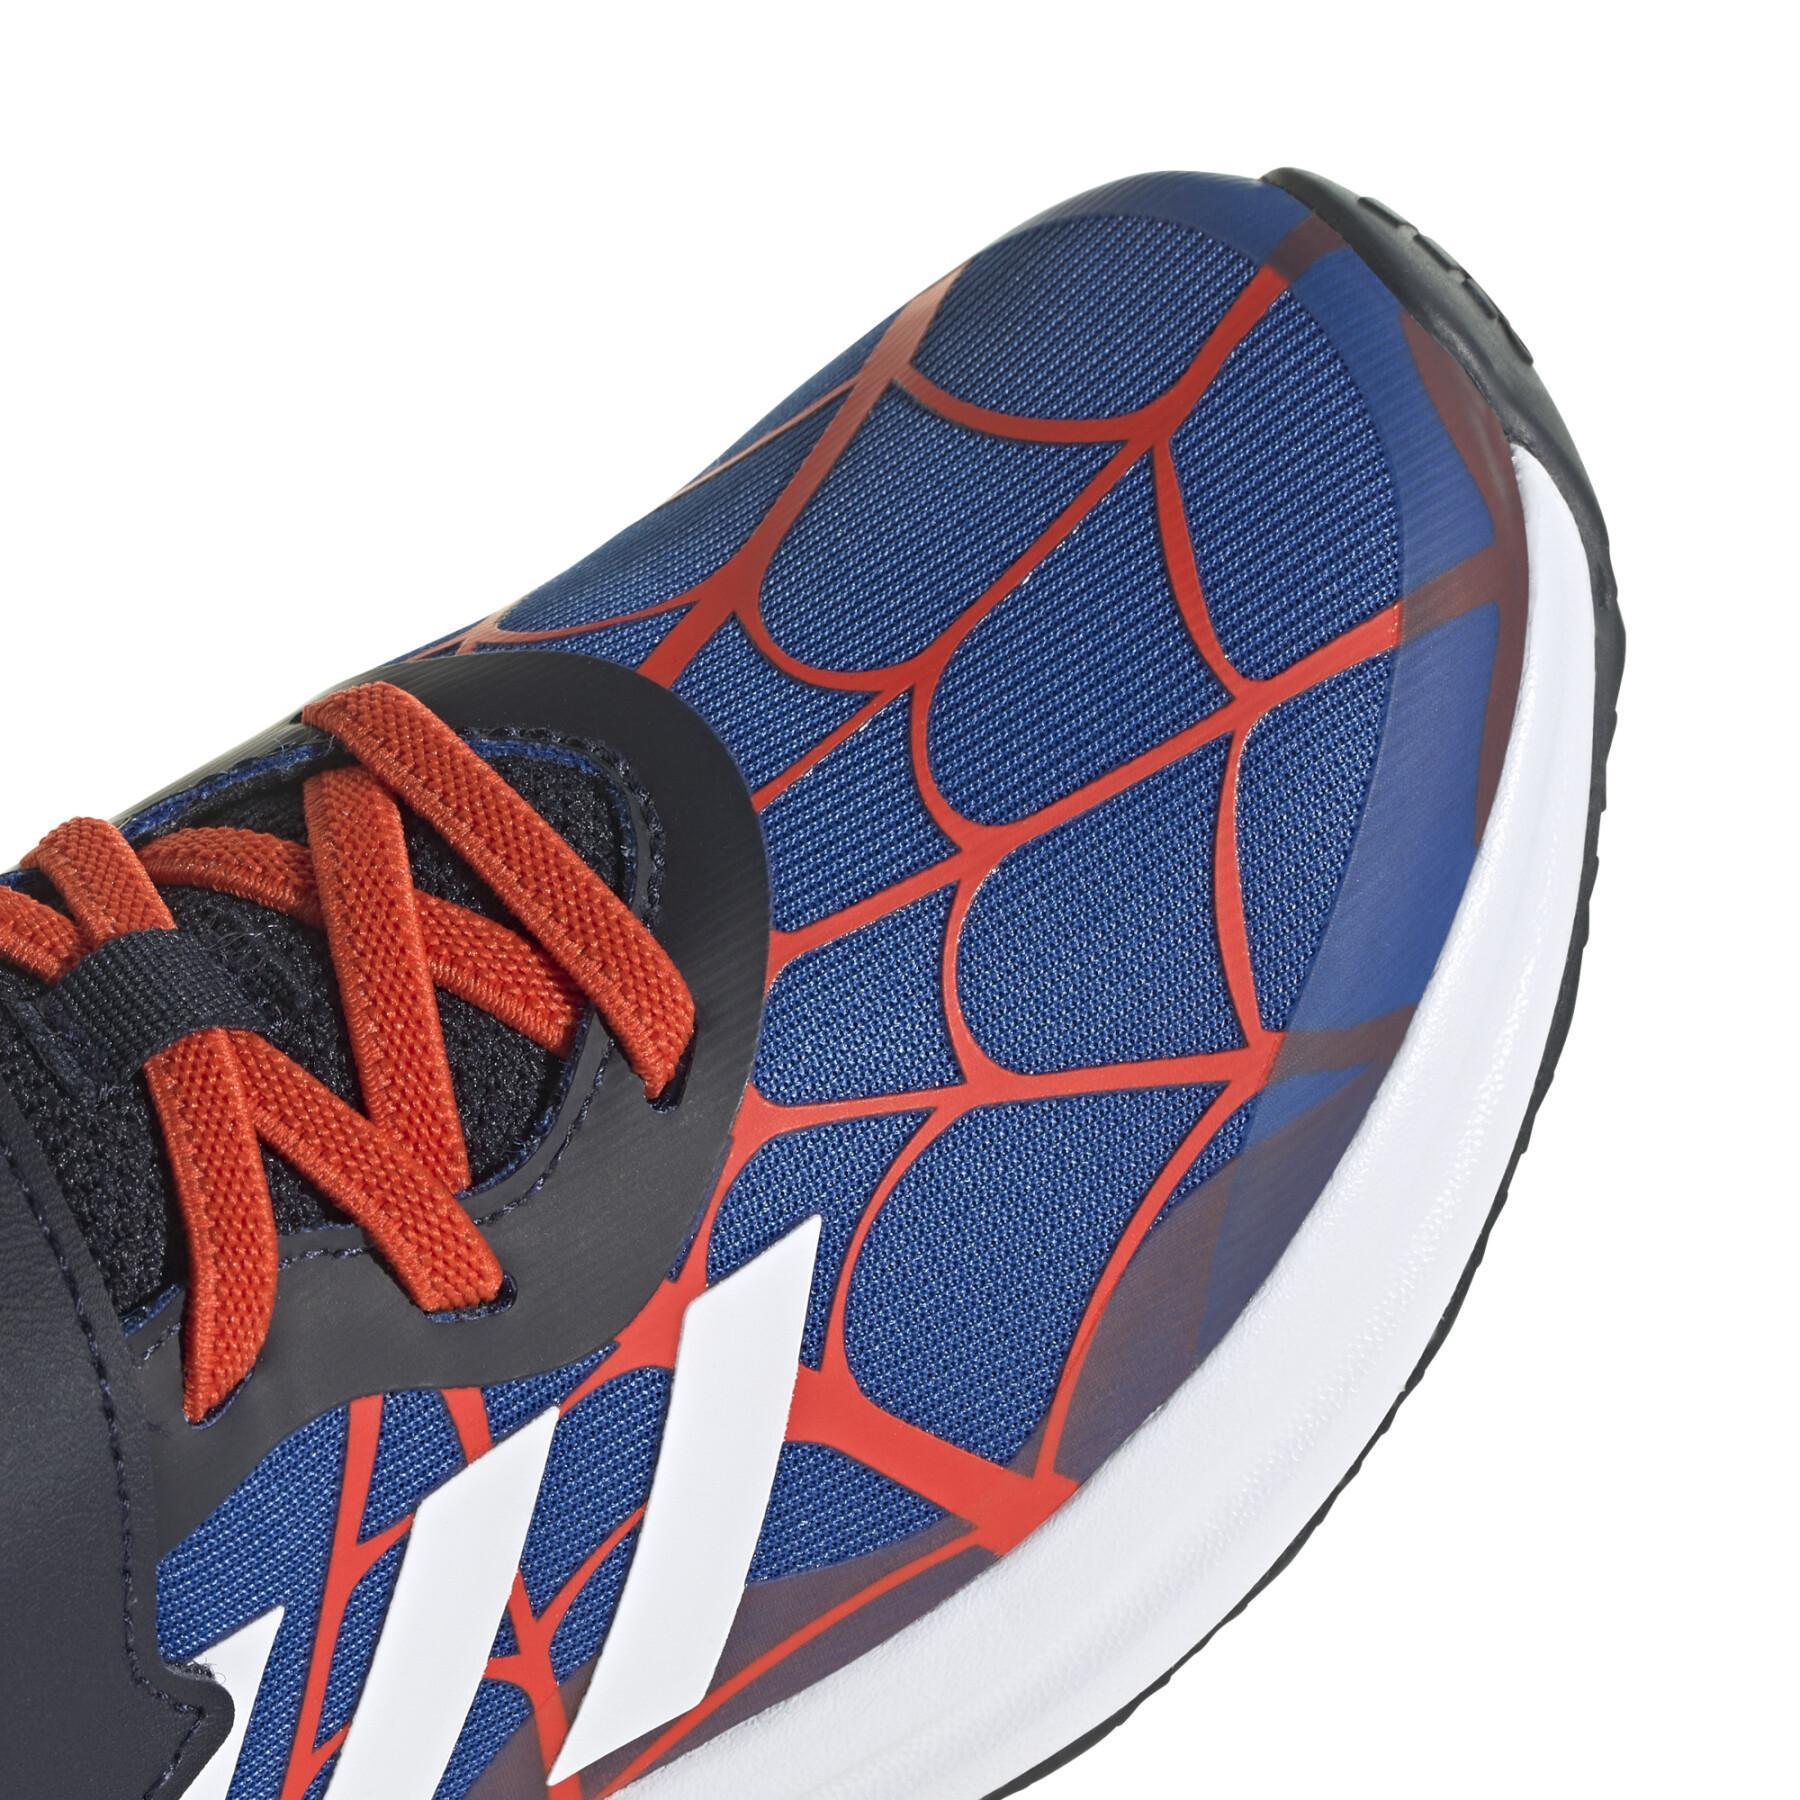 Kinderschuhe adidas Marvel Spider-Man Fortarun